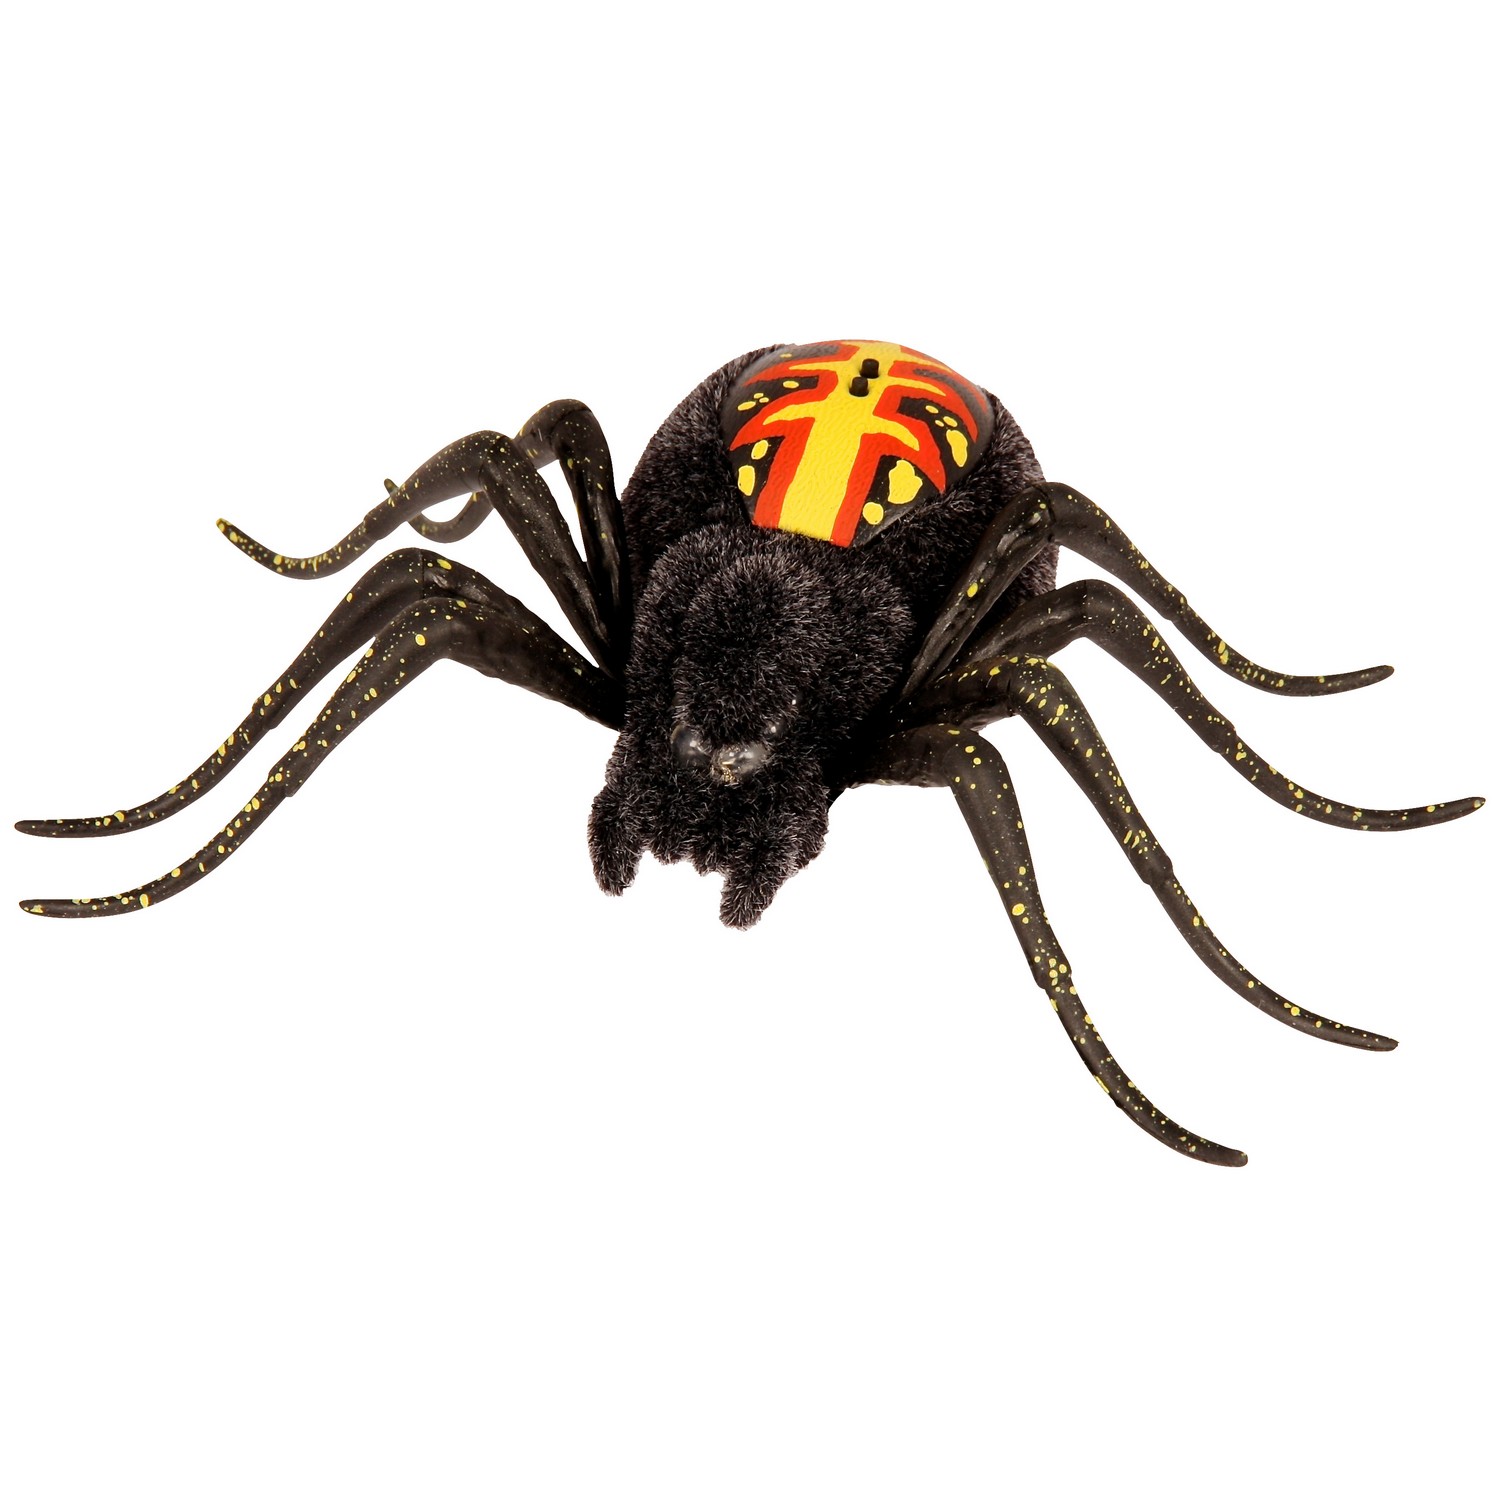 Good wild pets. Moose Wild Pets паук. Moose Toys пауки. Интерактивная игрушка робот Moose Wild Pets Spider паук 29001. Паук Bullyland.